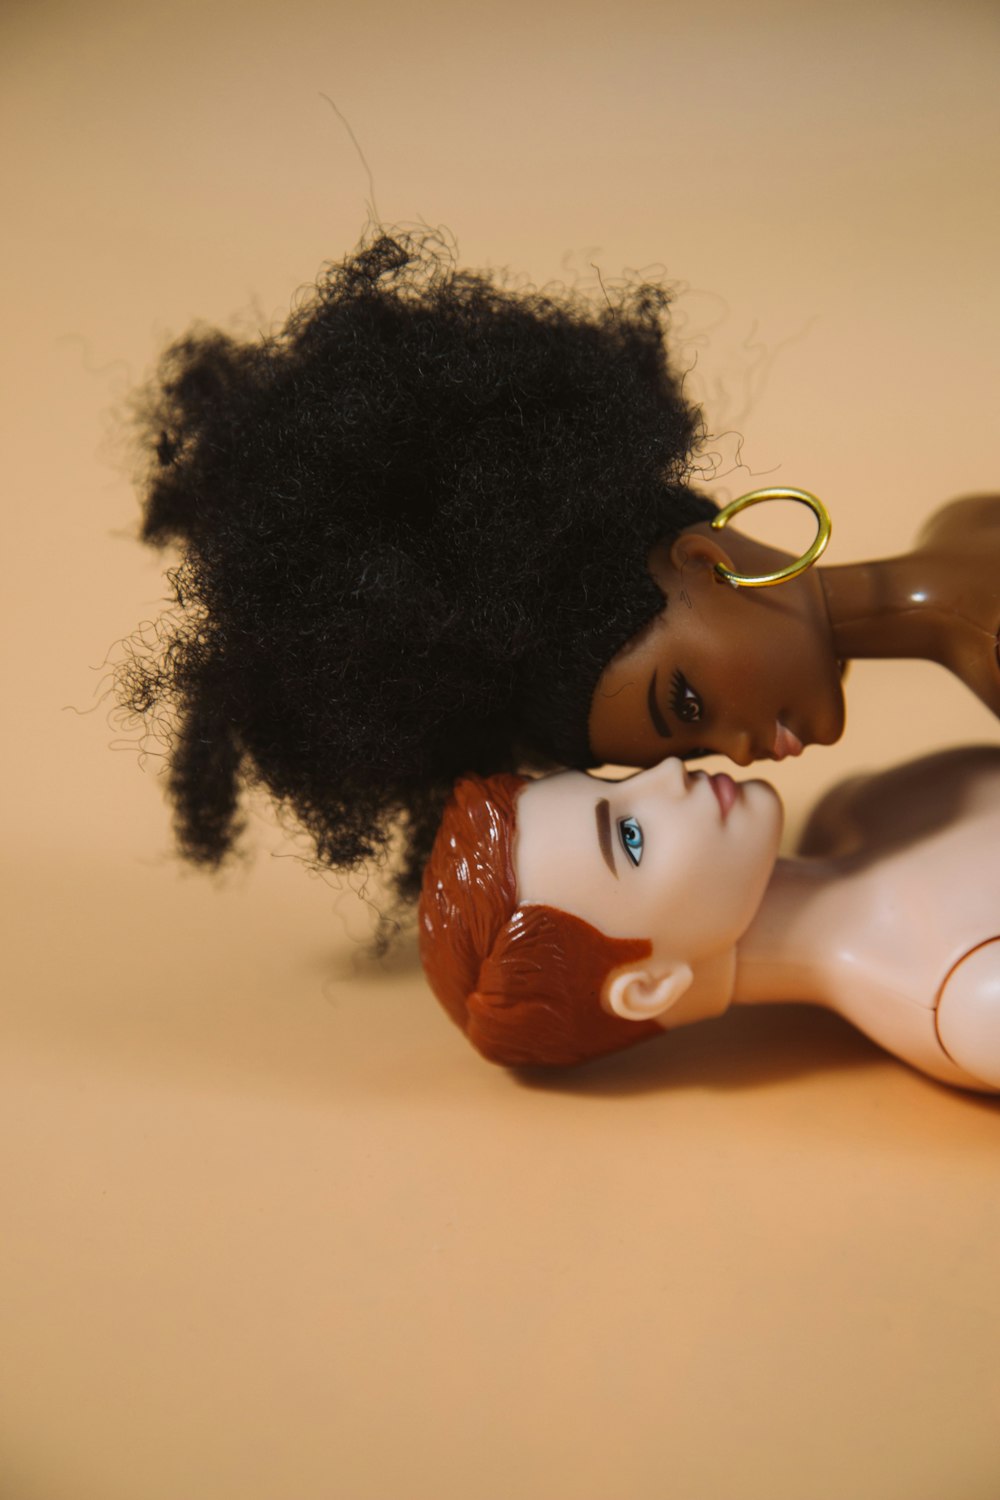 bambola dai capelli neri su lavandino in ceramica bianca